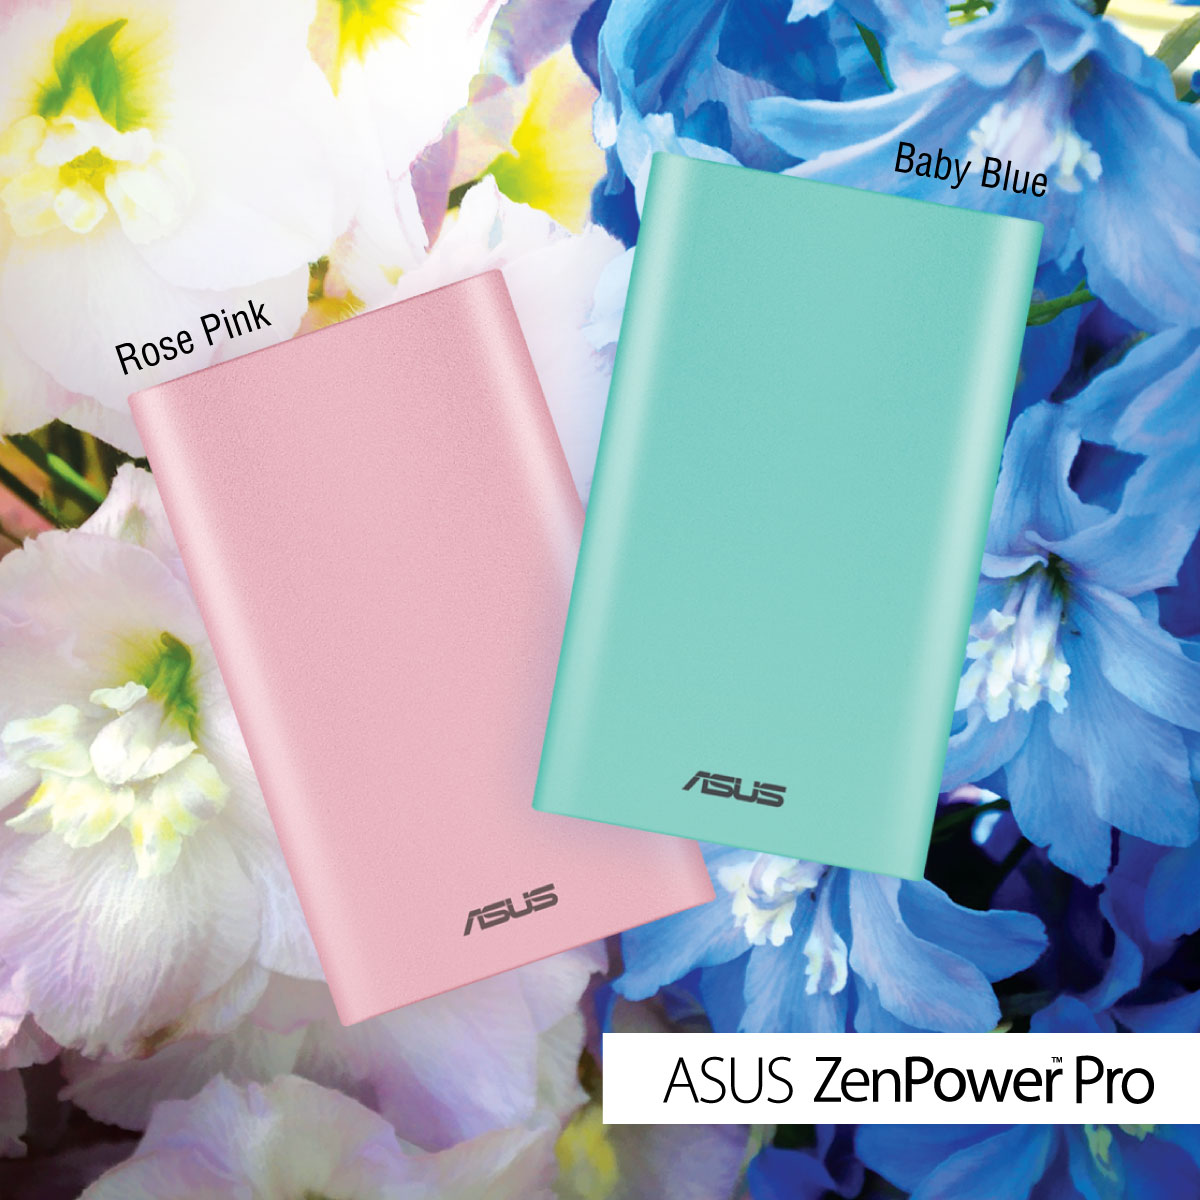 ASUS ZenPower Pro New Colors